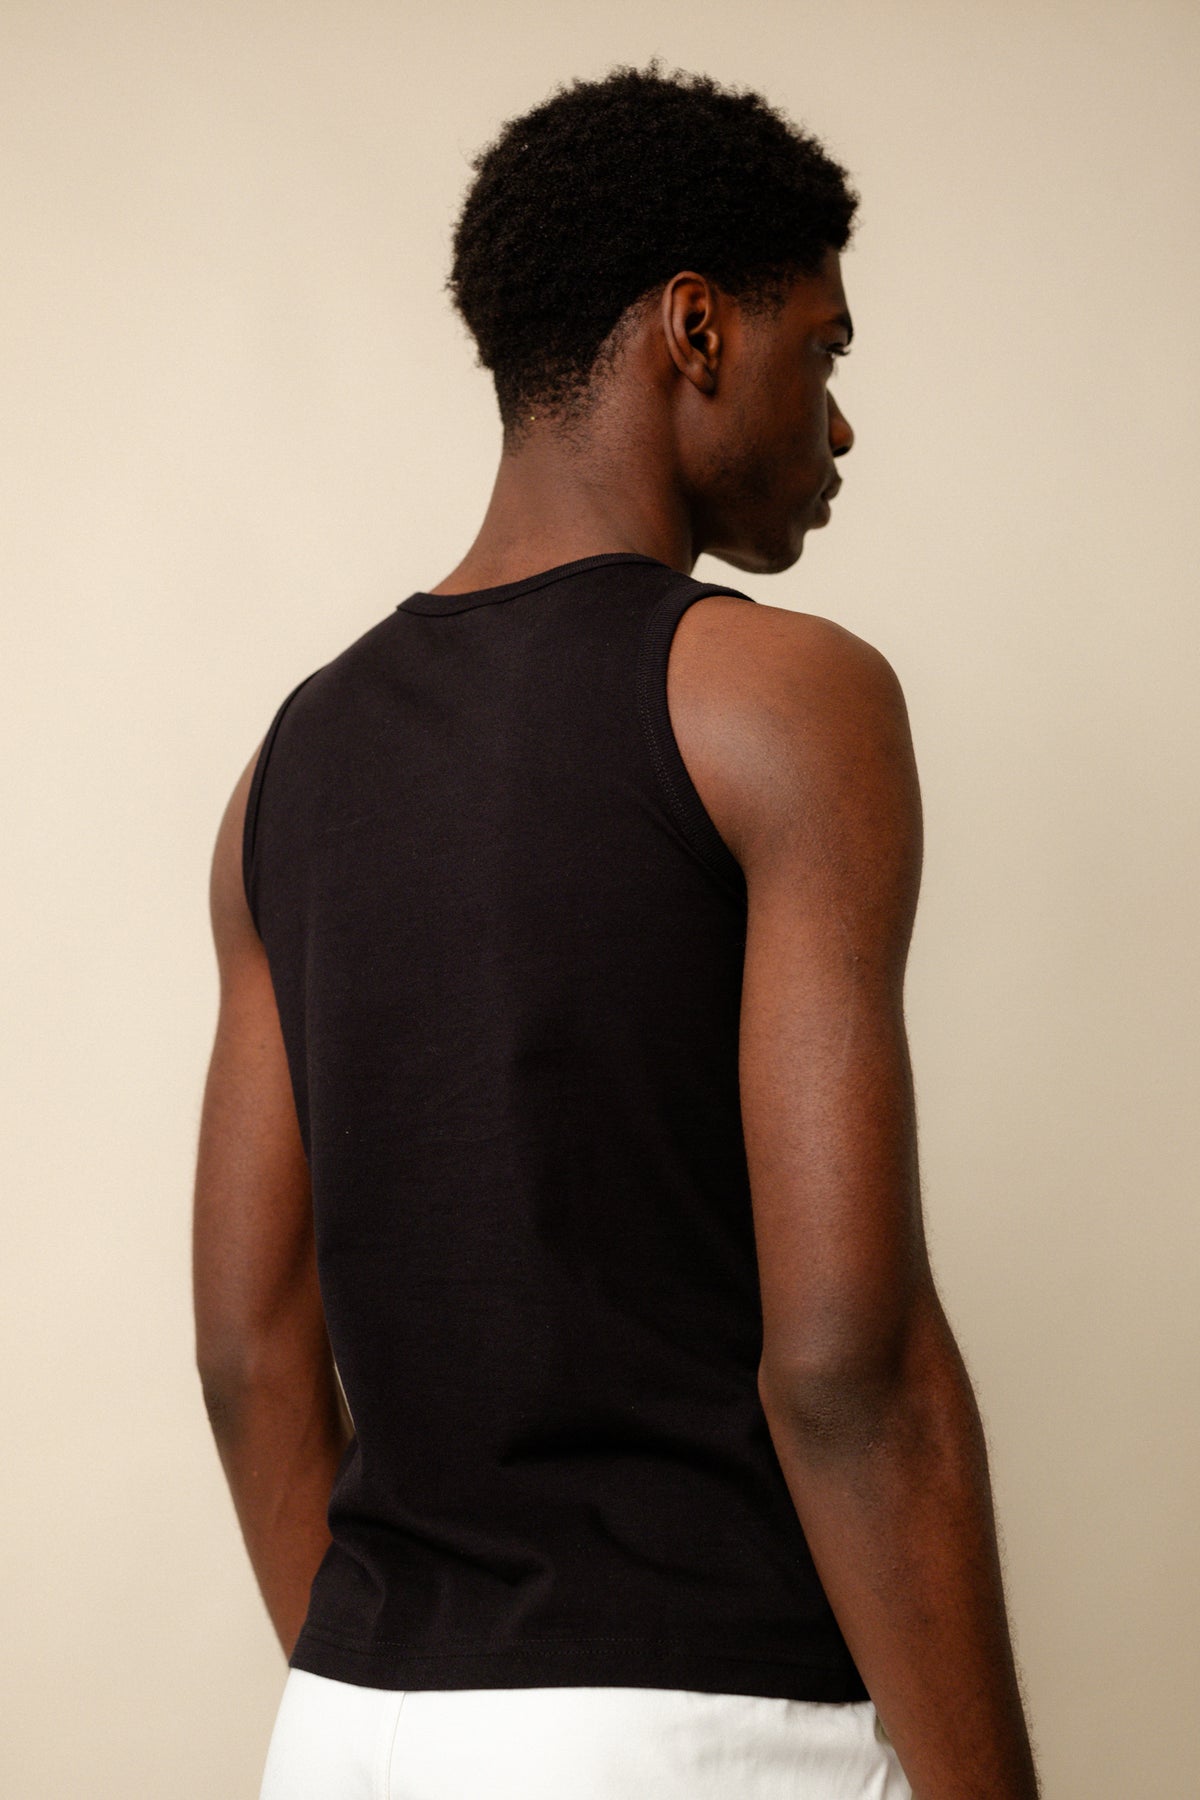 
            Back of black male wearing sleeveless t shirt